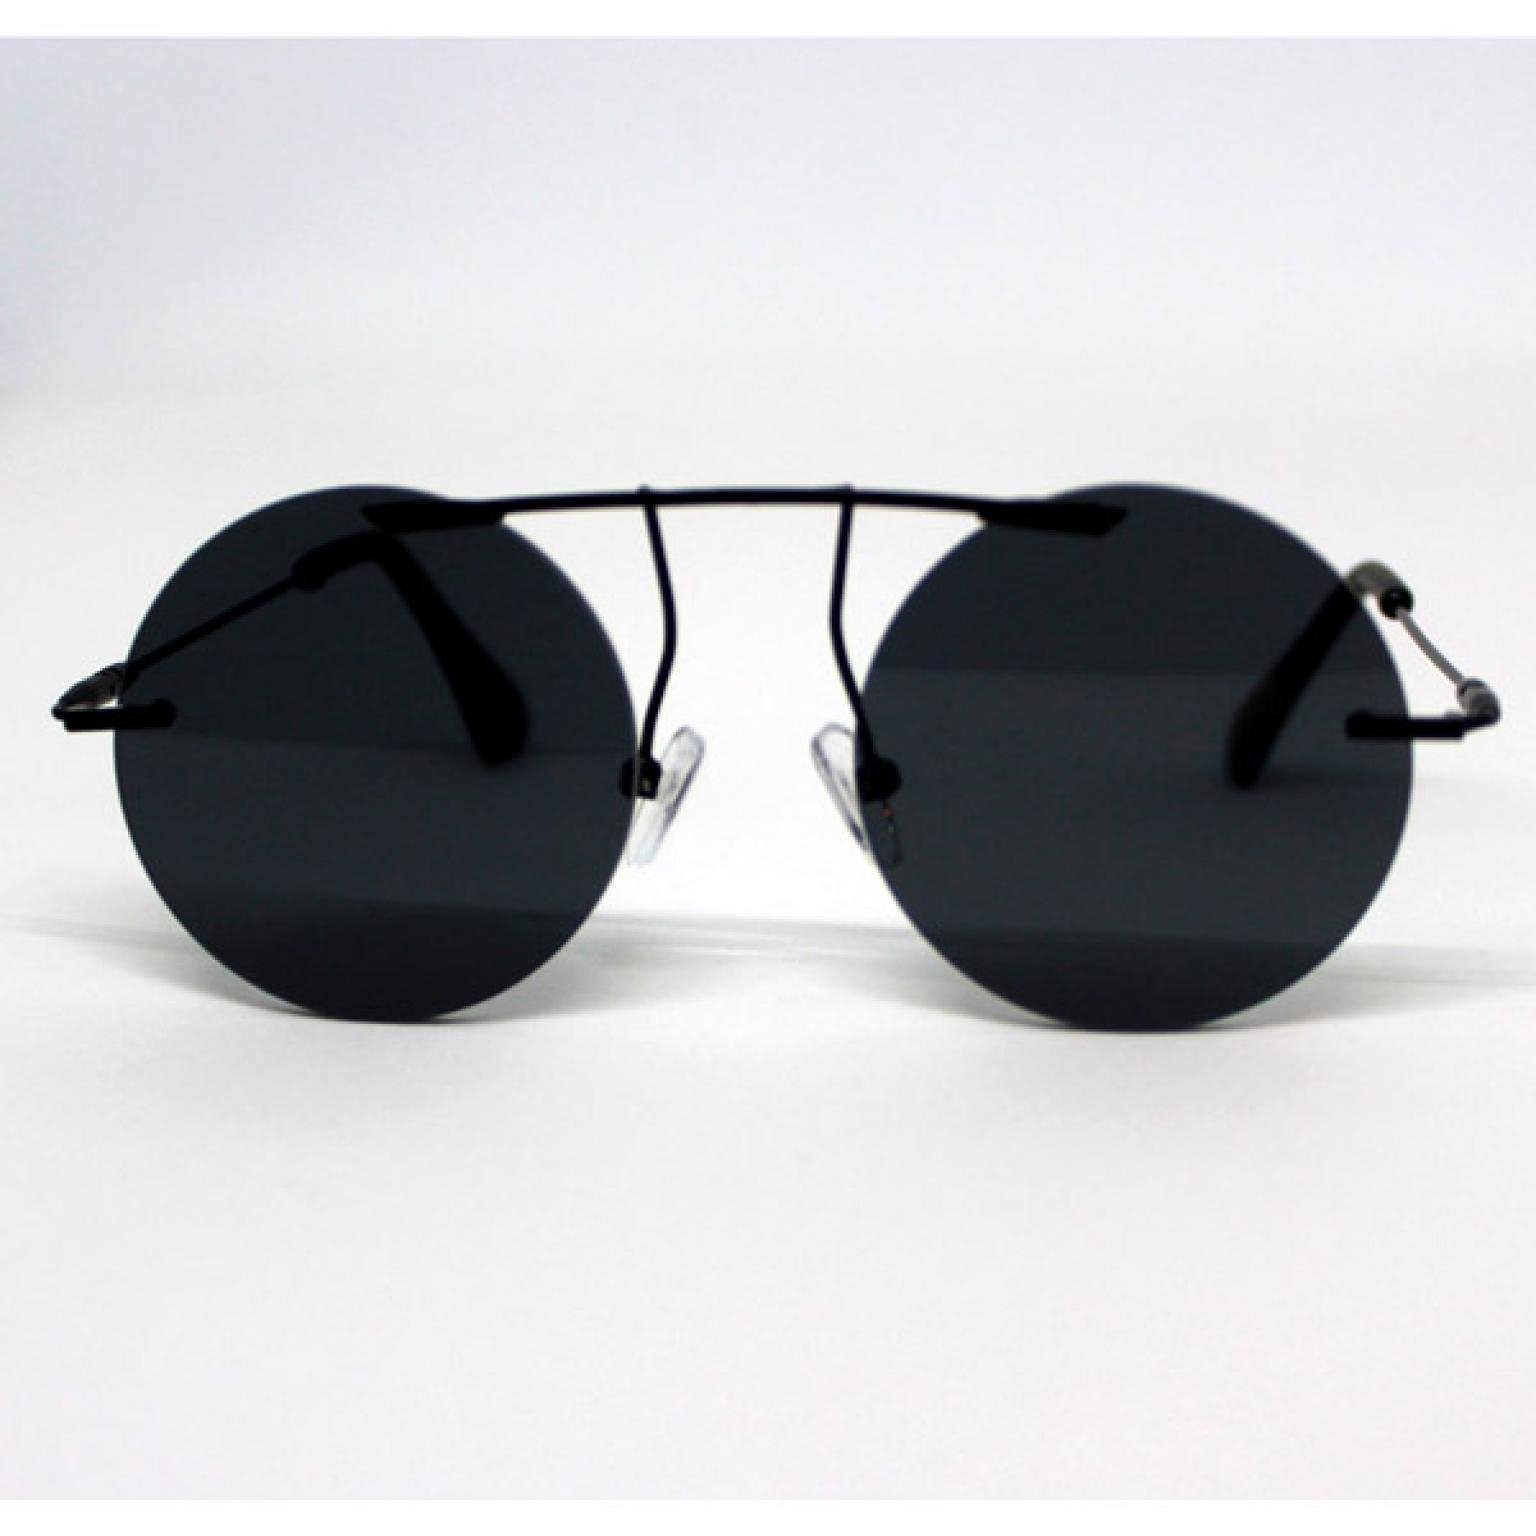 Black Round Shape Unisex Sunglass For Men Women UV400 Protected |SGM-67|